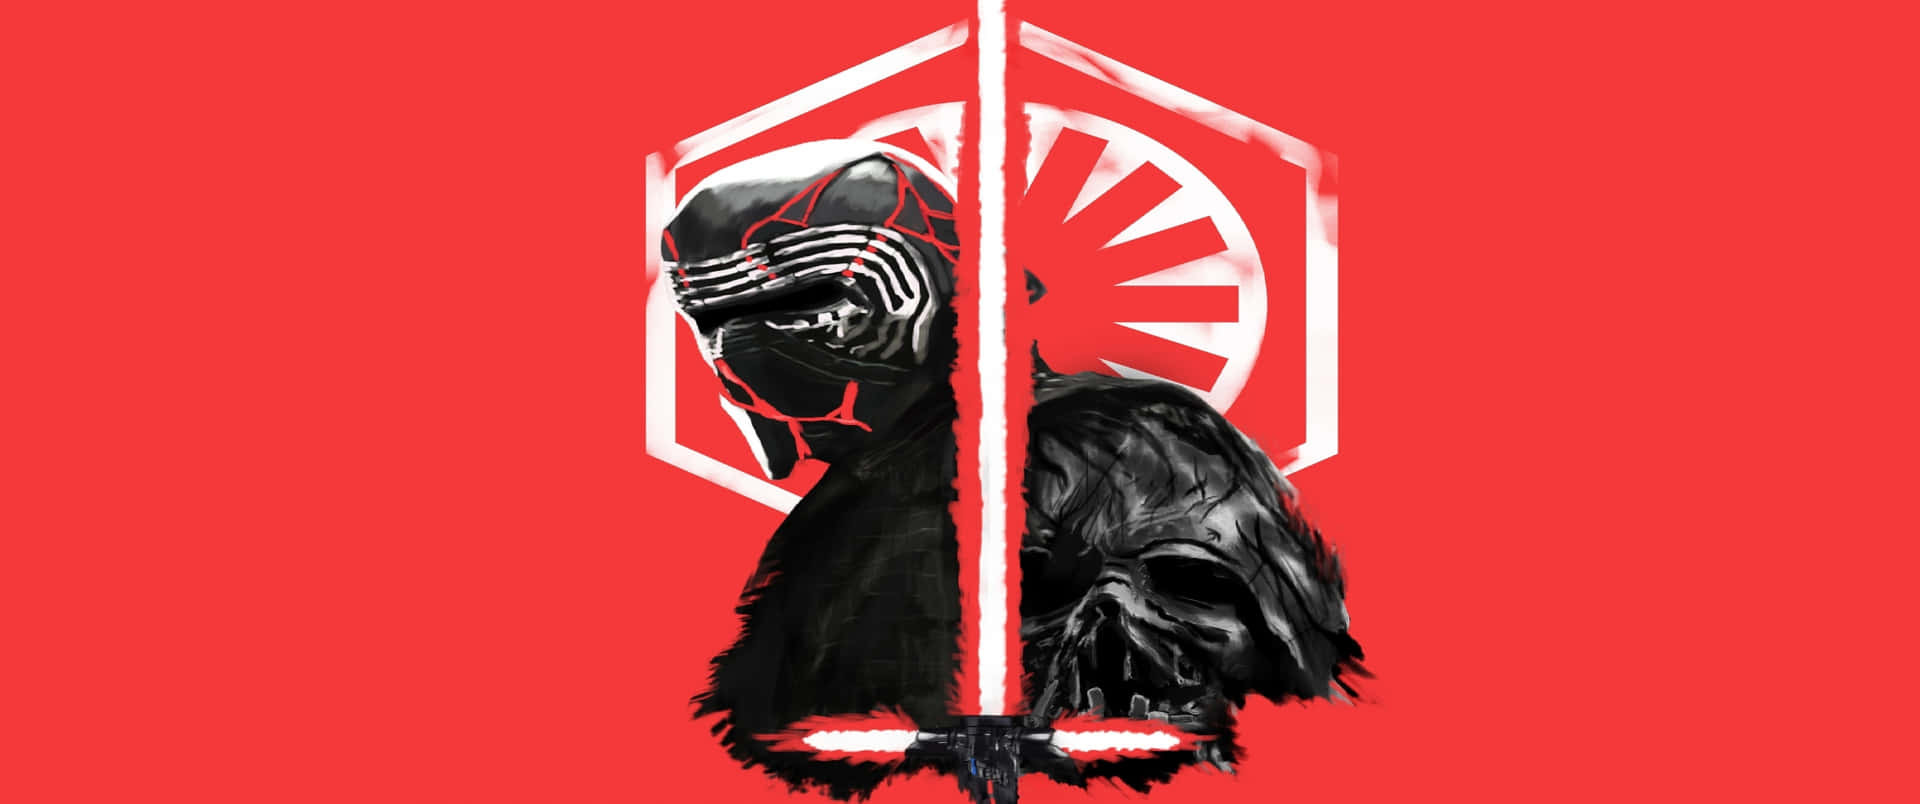 Star Wars Kylo Renand Darth Vader Artwork Wallpaper